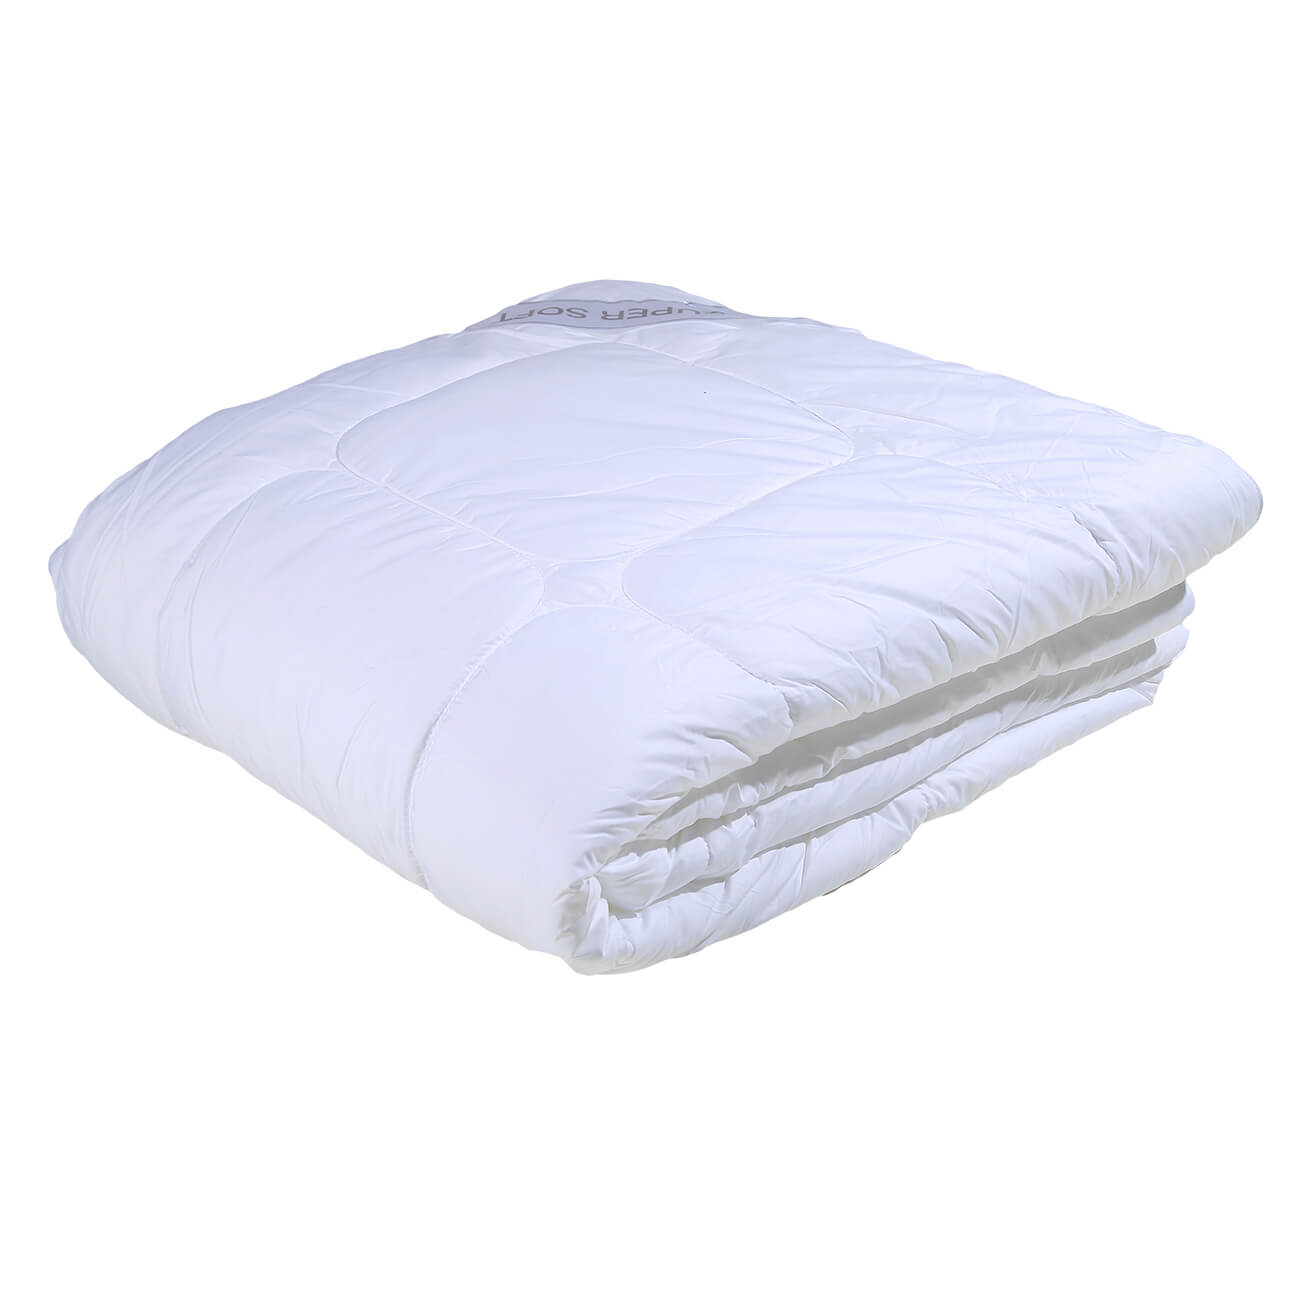 Одеяло, 200х220 см, микрофибра, Super Soft одеяло 140х200 см микрофибра холлофайбер бежевое молочное hollow fiber